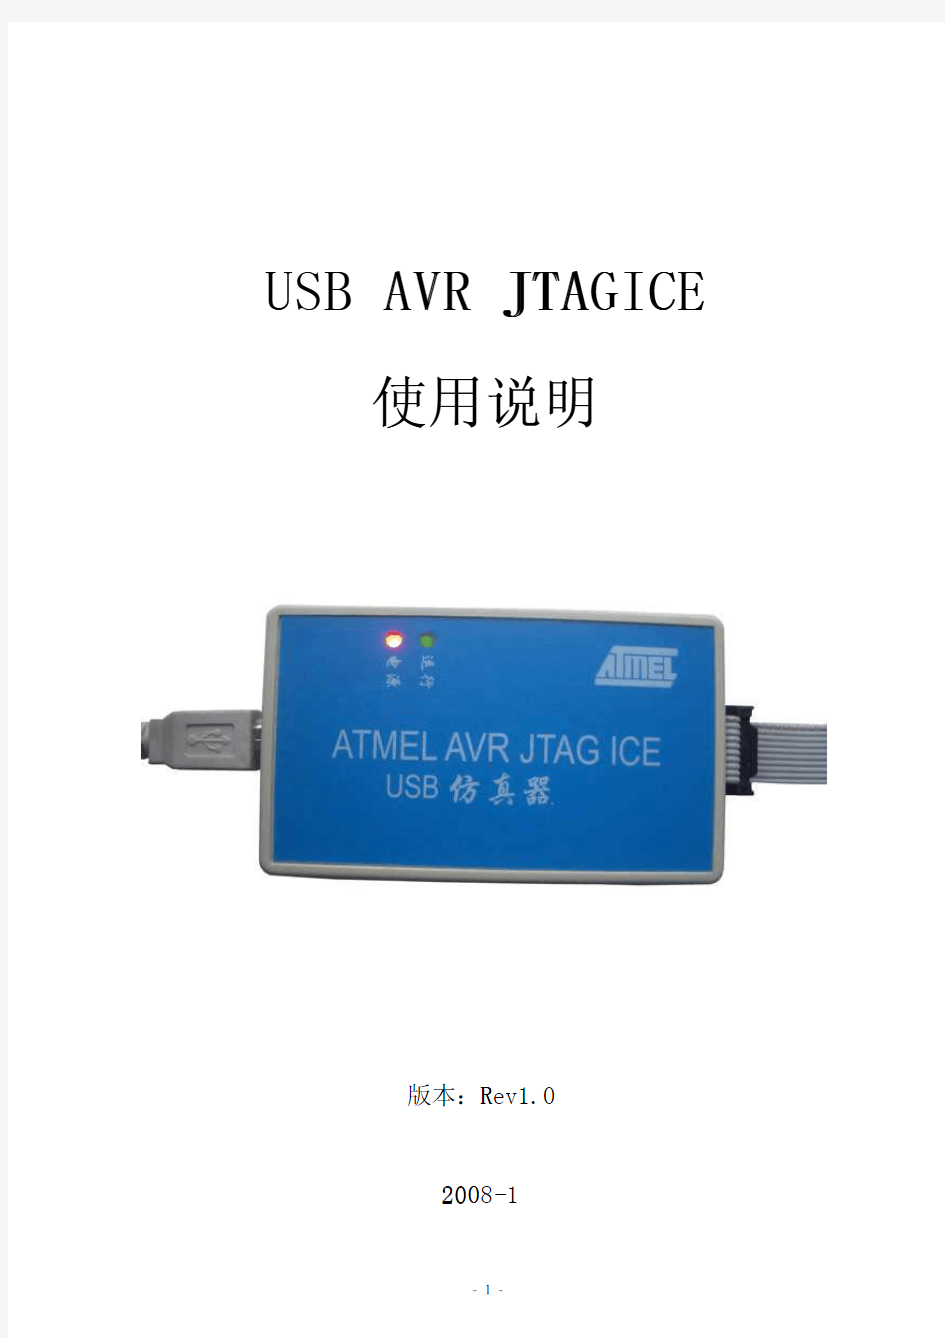 USB+AVR+JTAGICE使用说明书